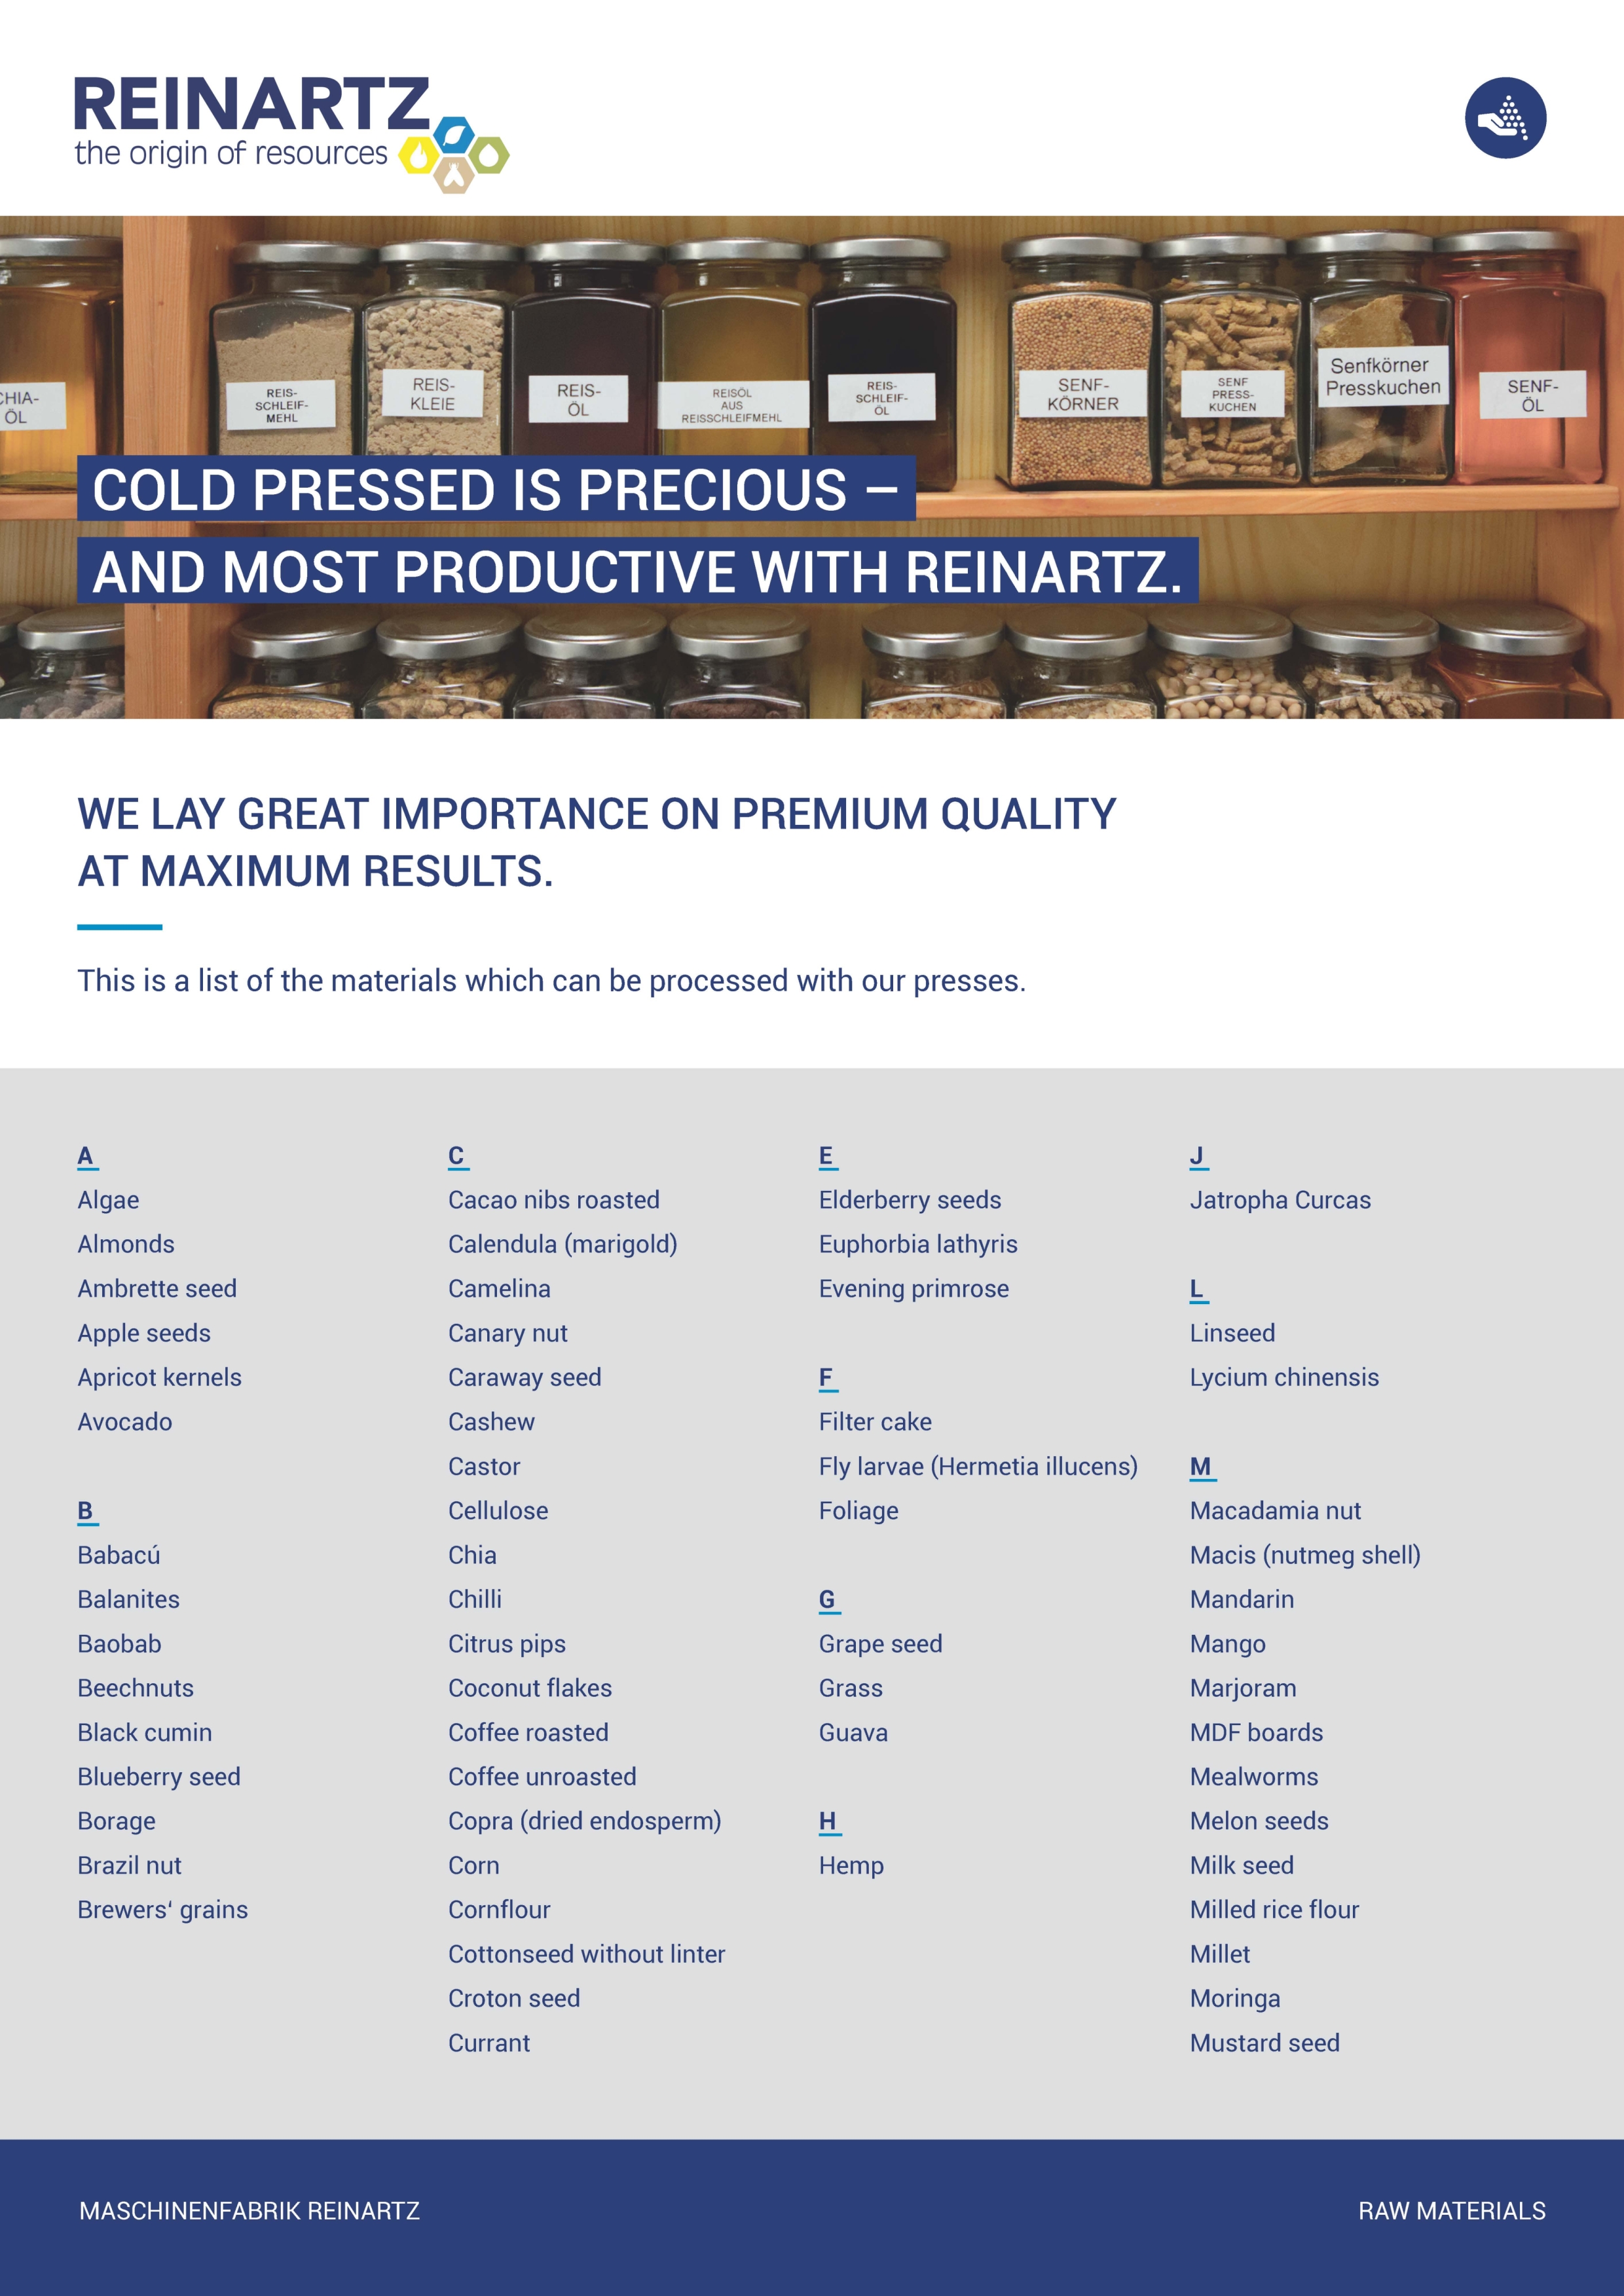 Col pressed is precious - Öffnet ein PDF Dokument